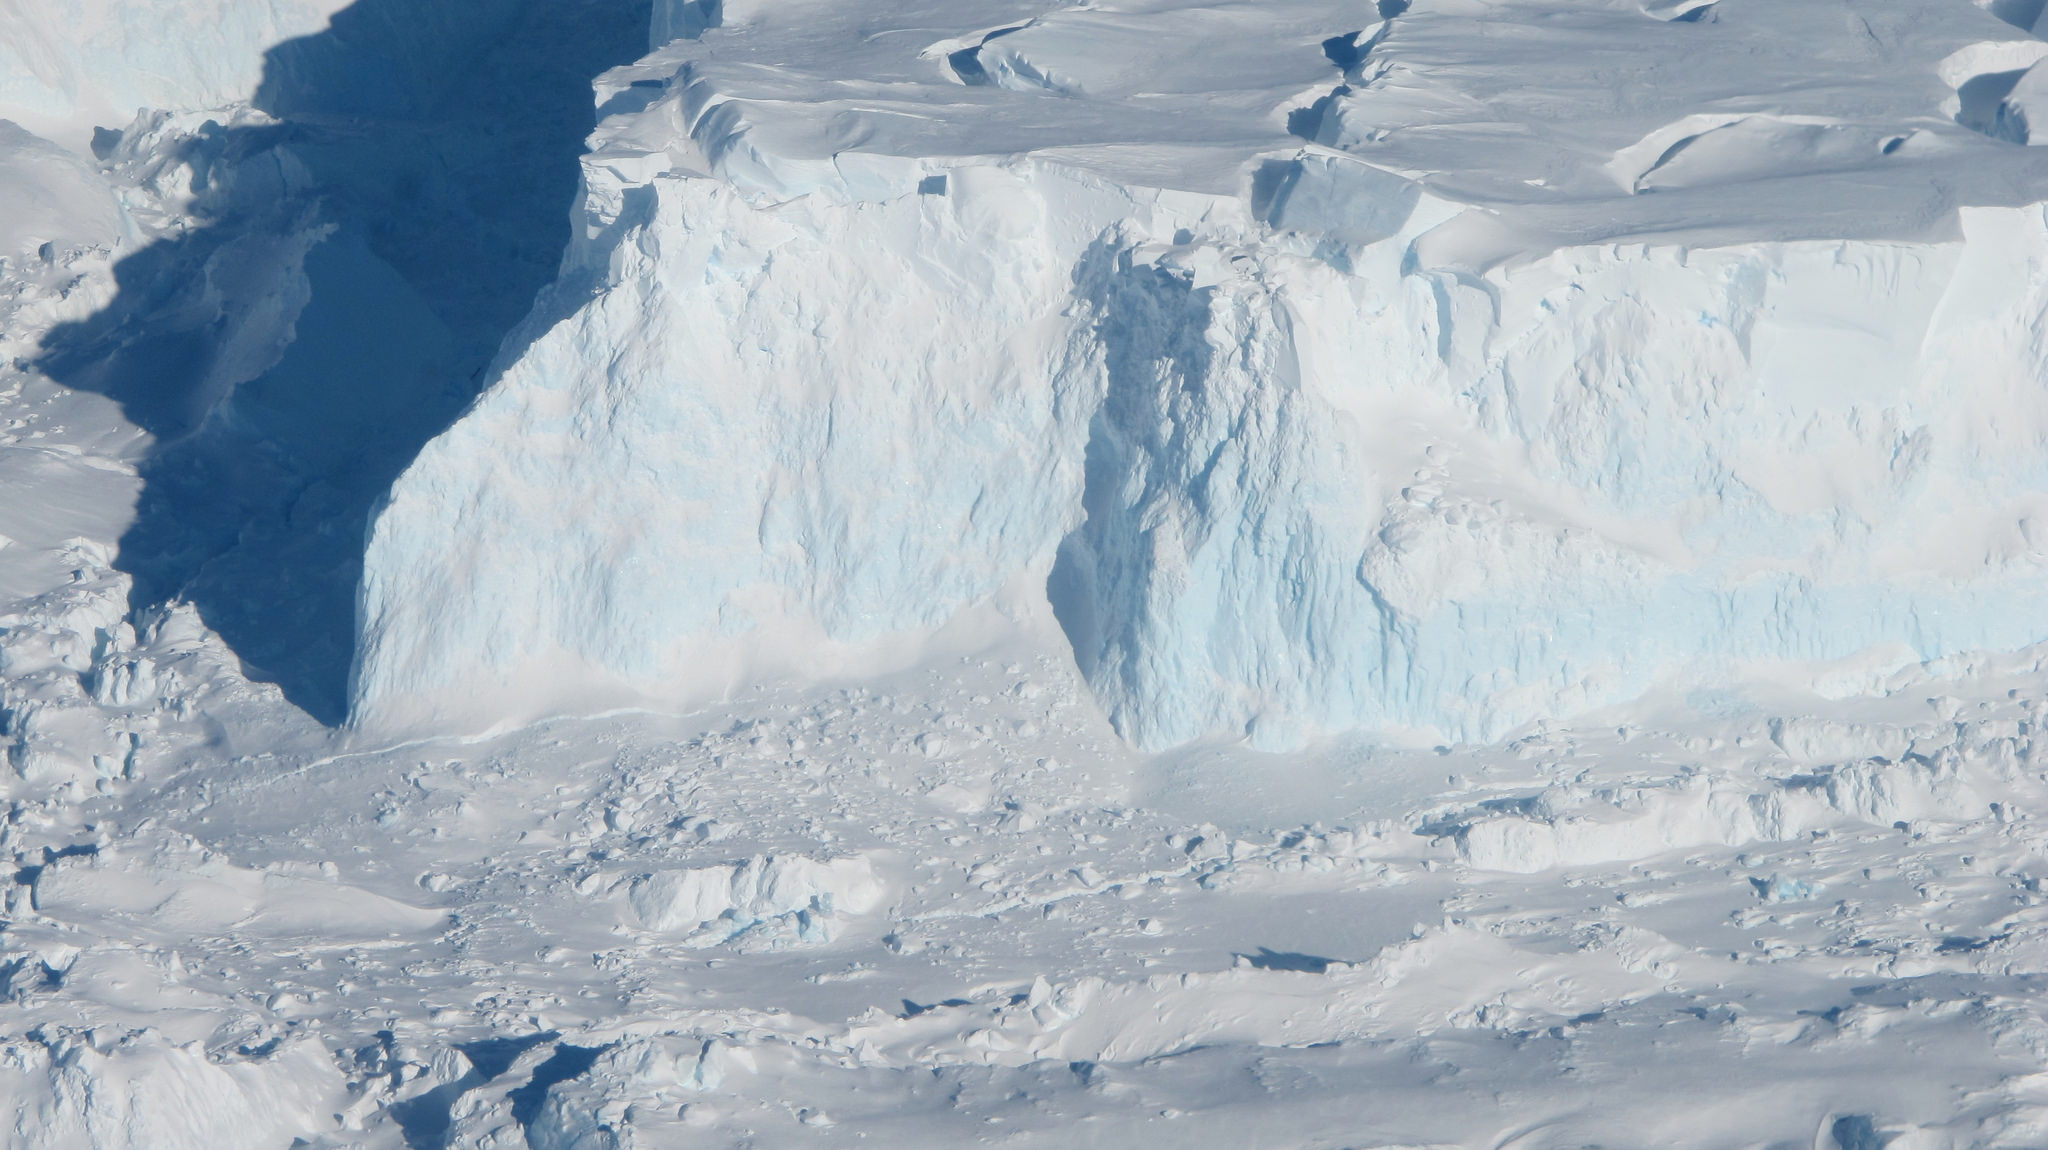 A photograph of Thwaites Glacier in Antarctica